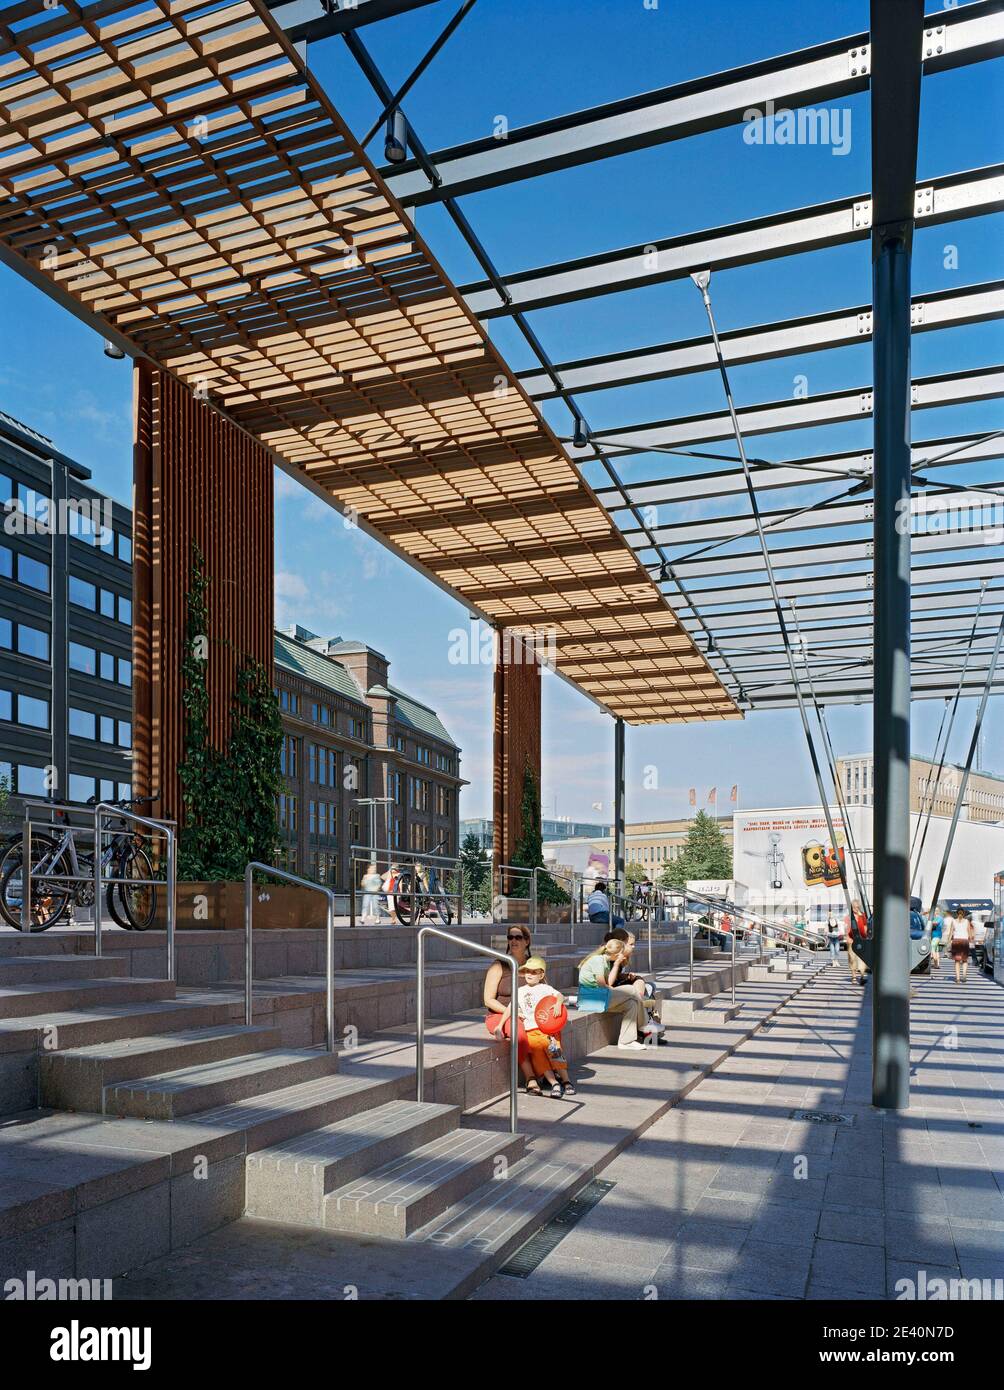 Kamppi Center Helsinki, Architects: Helin & Co Architects, Juhani Pallasmaa Architects, einkaufszentrum, shopping center, shopping centre, centro comm Stock Photo